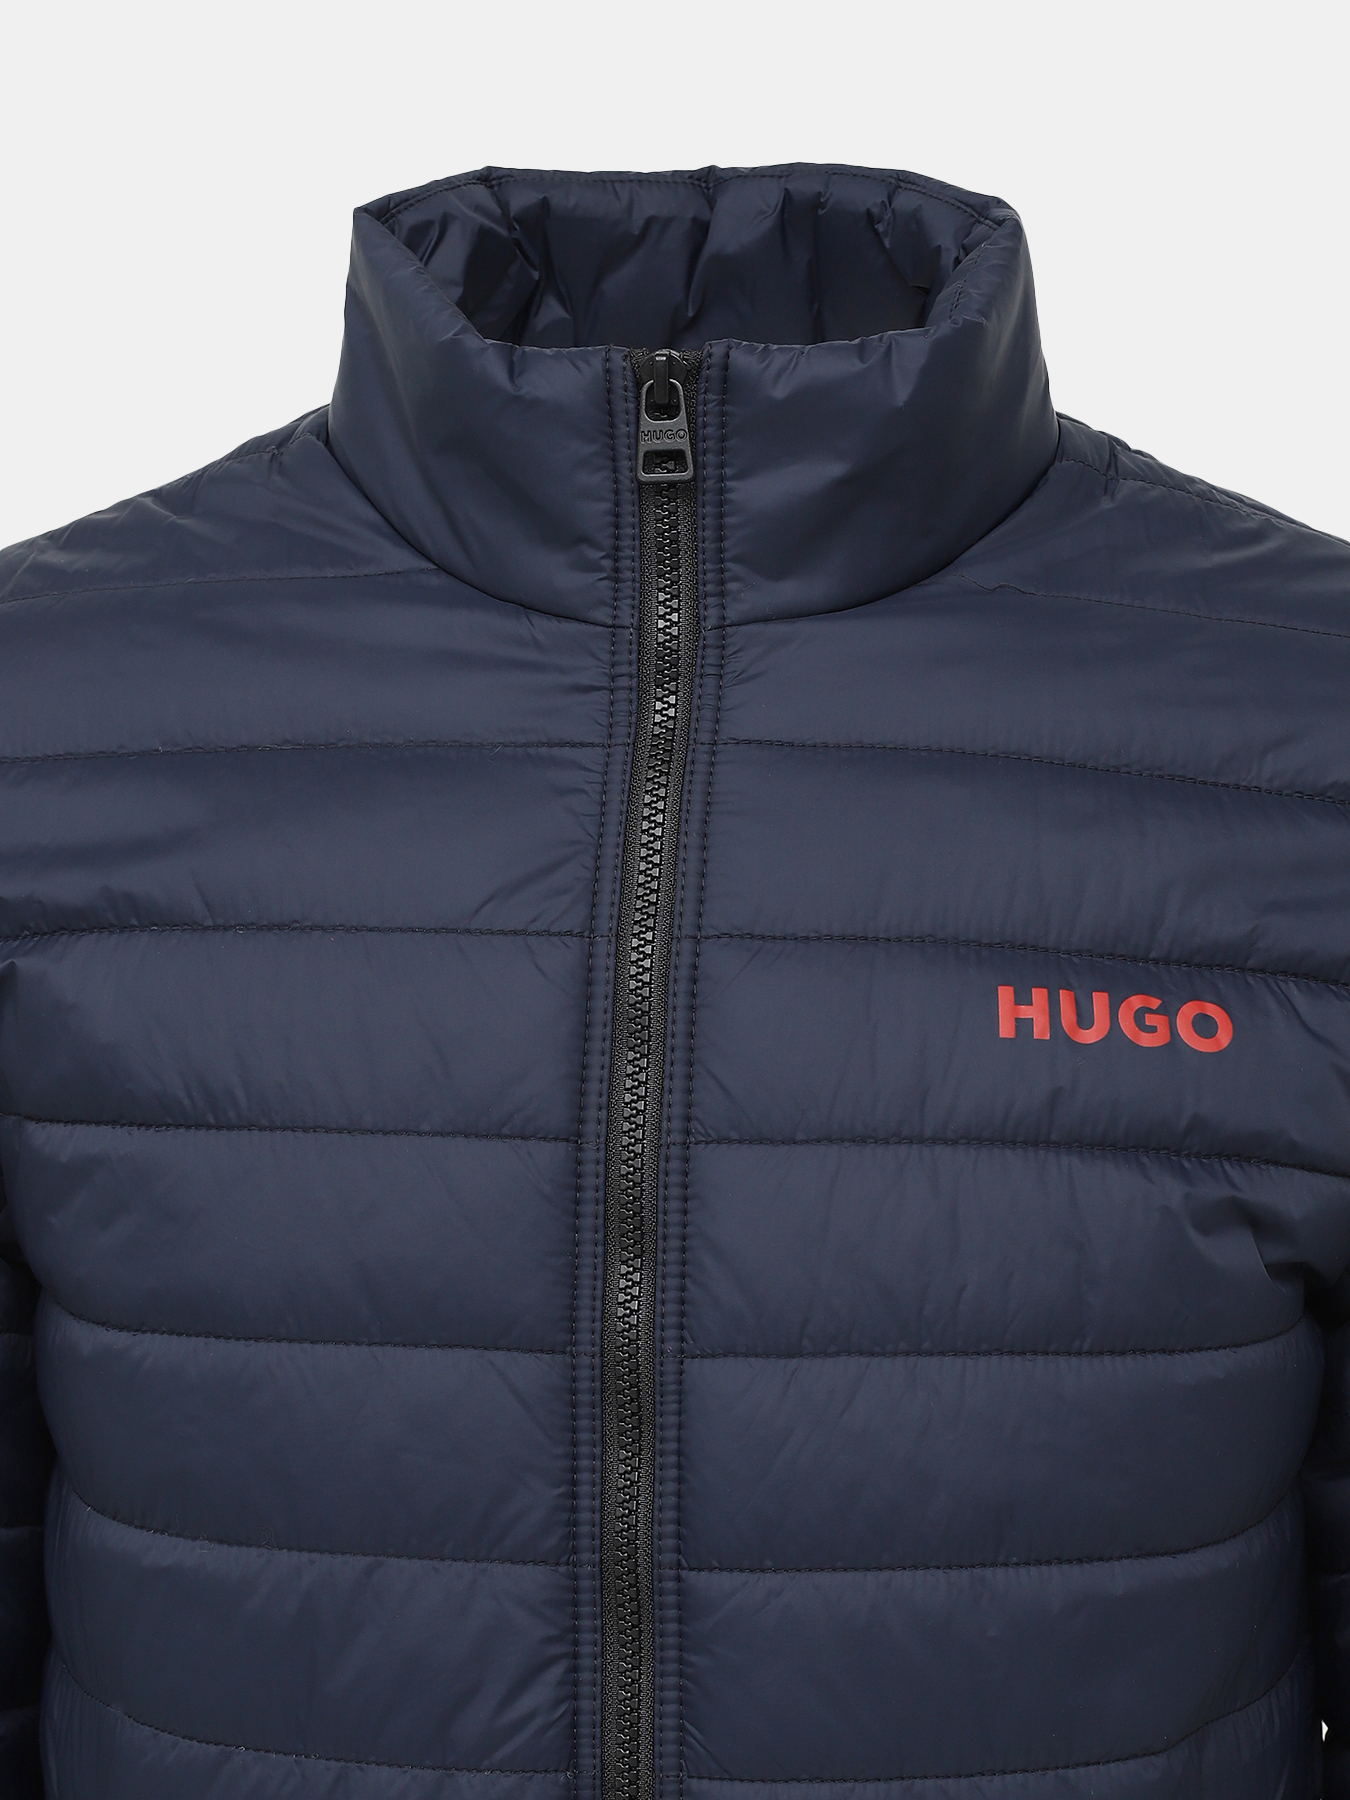 Куртка Benti HUGO 437018-045, цвет темно-синий, размер 52-54 - фото 3